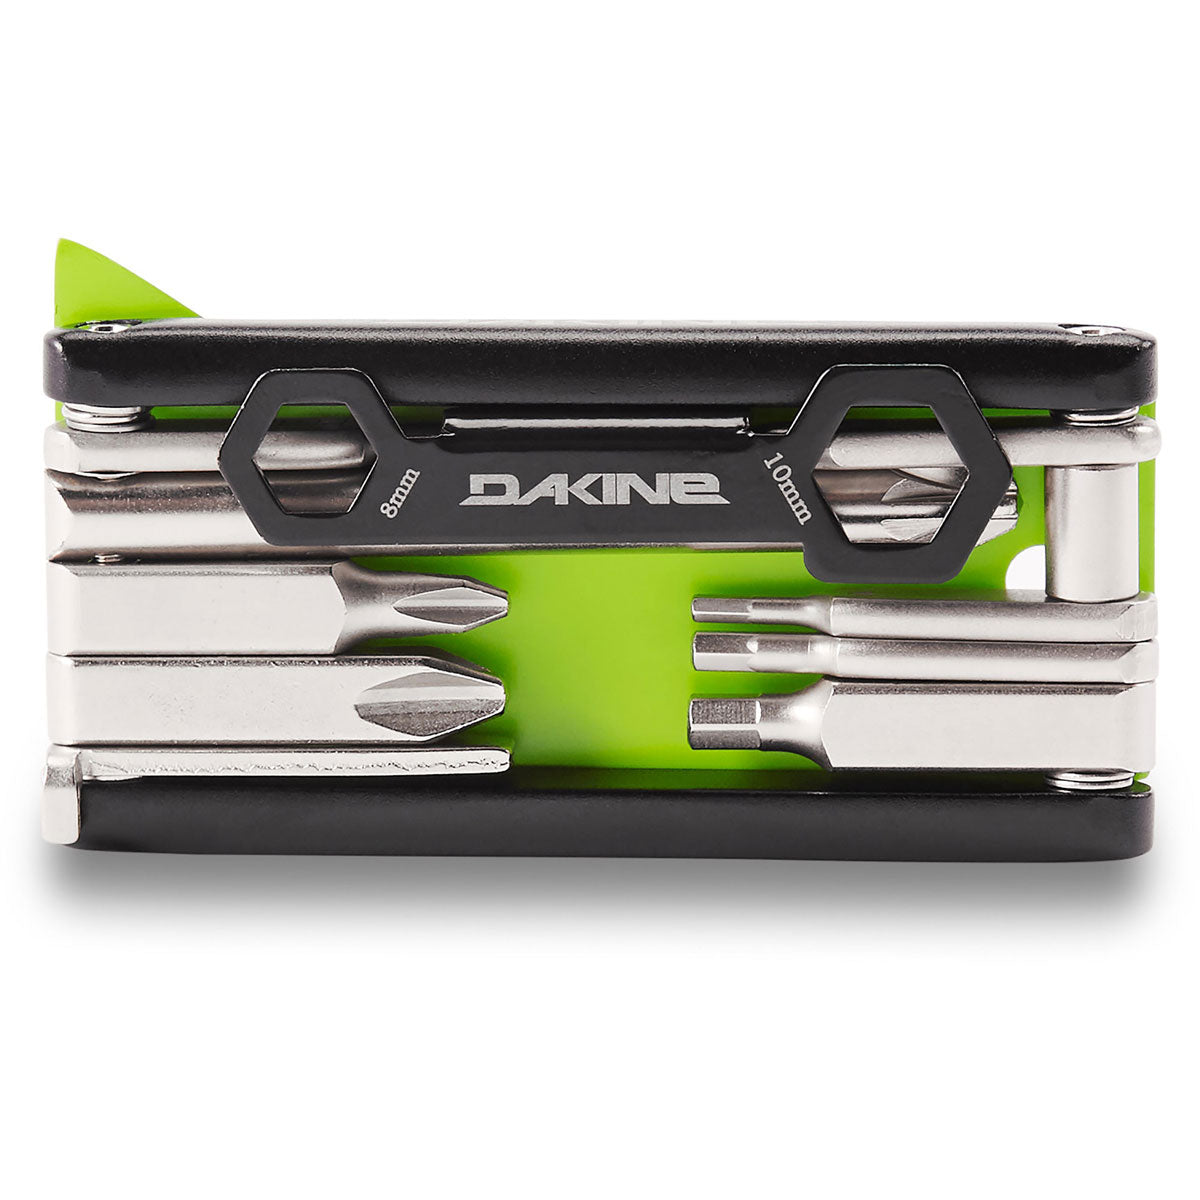 Dakine Bc Snowboard Tools & Locks - Green image 1